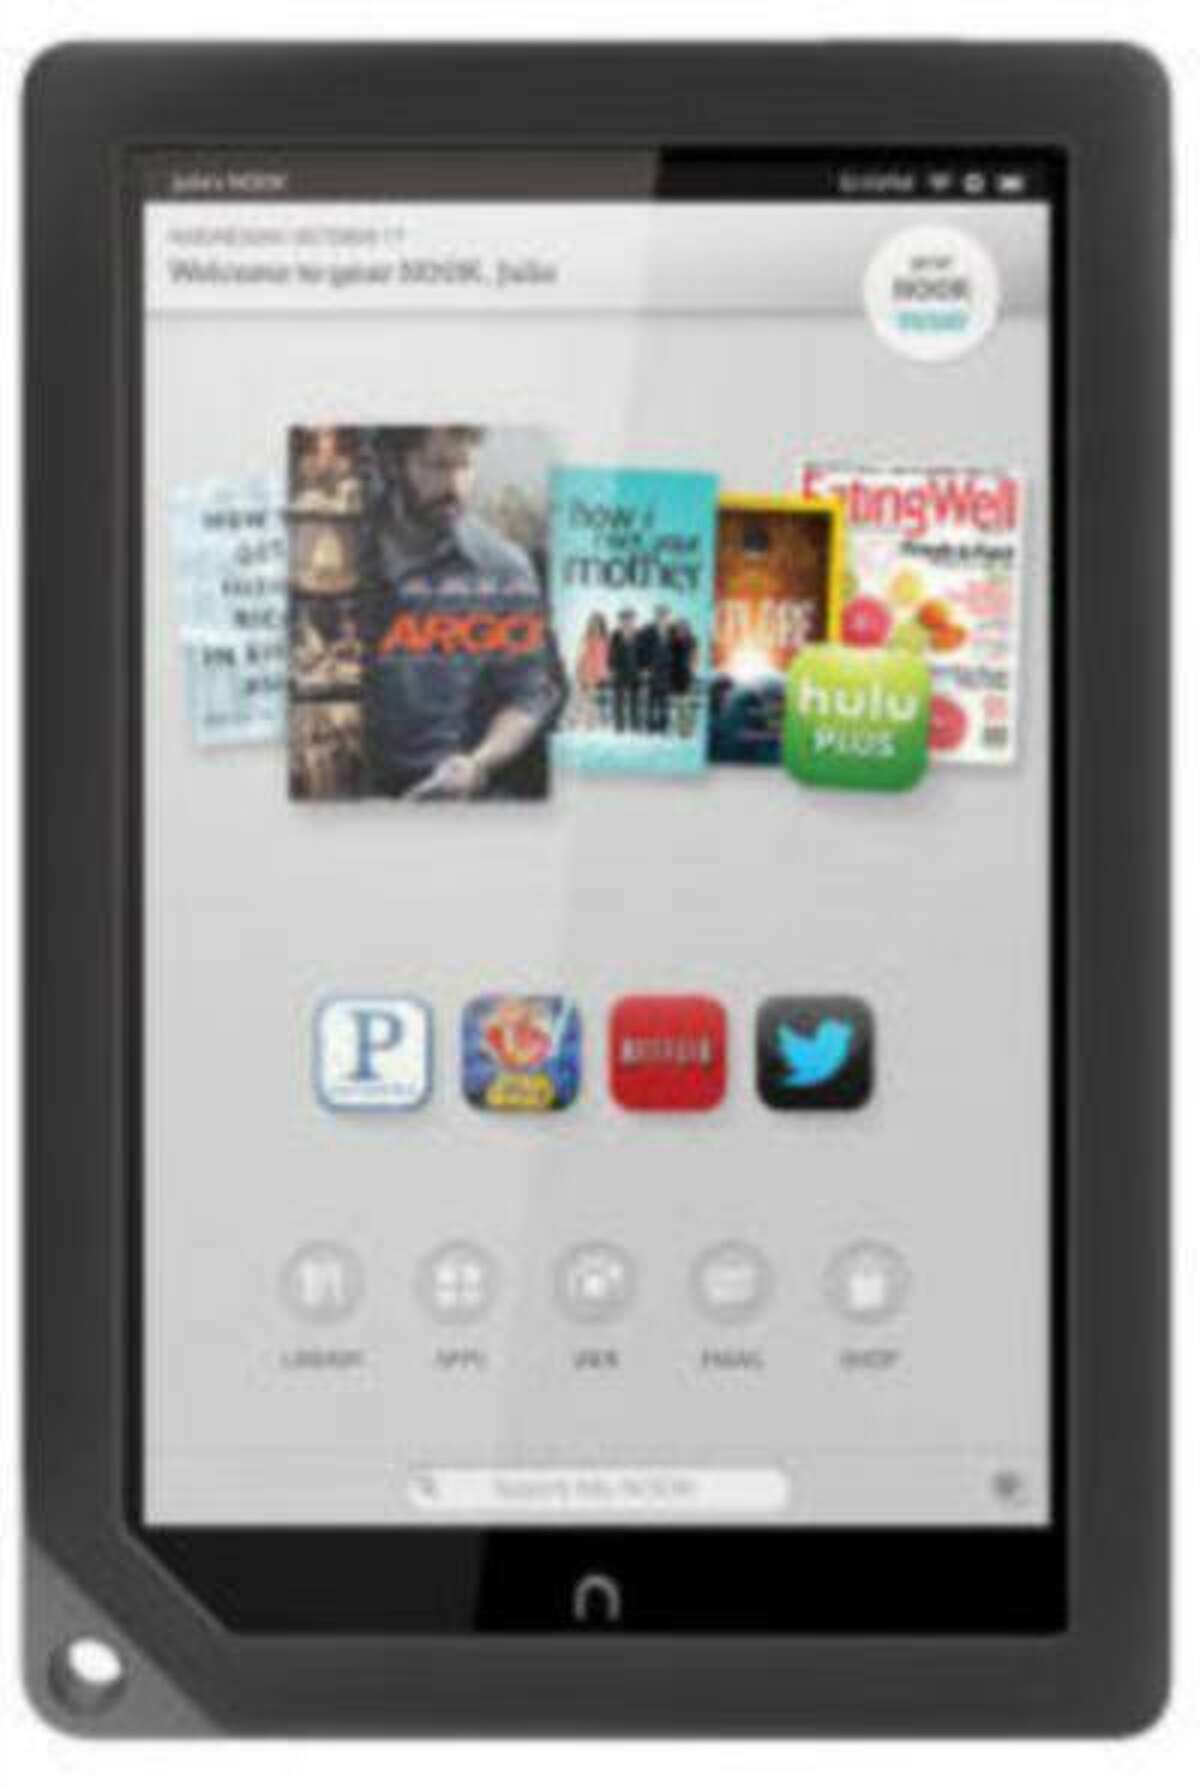 Barnes & Noble's Nook HD+ tablet